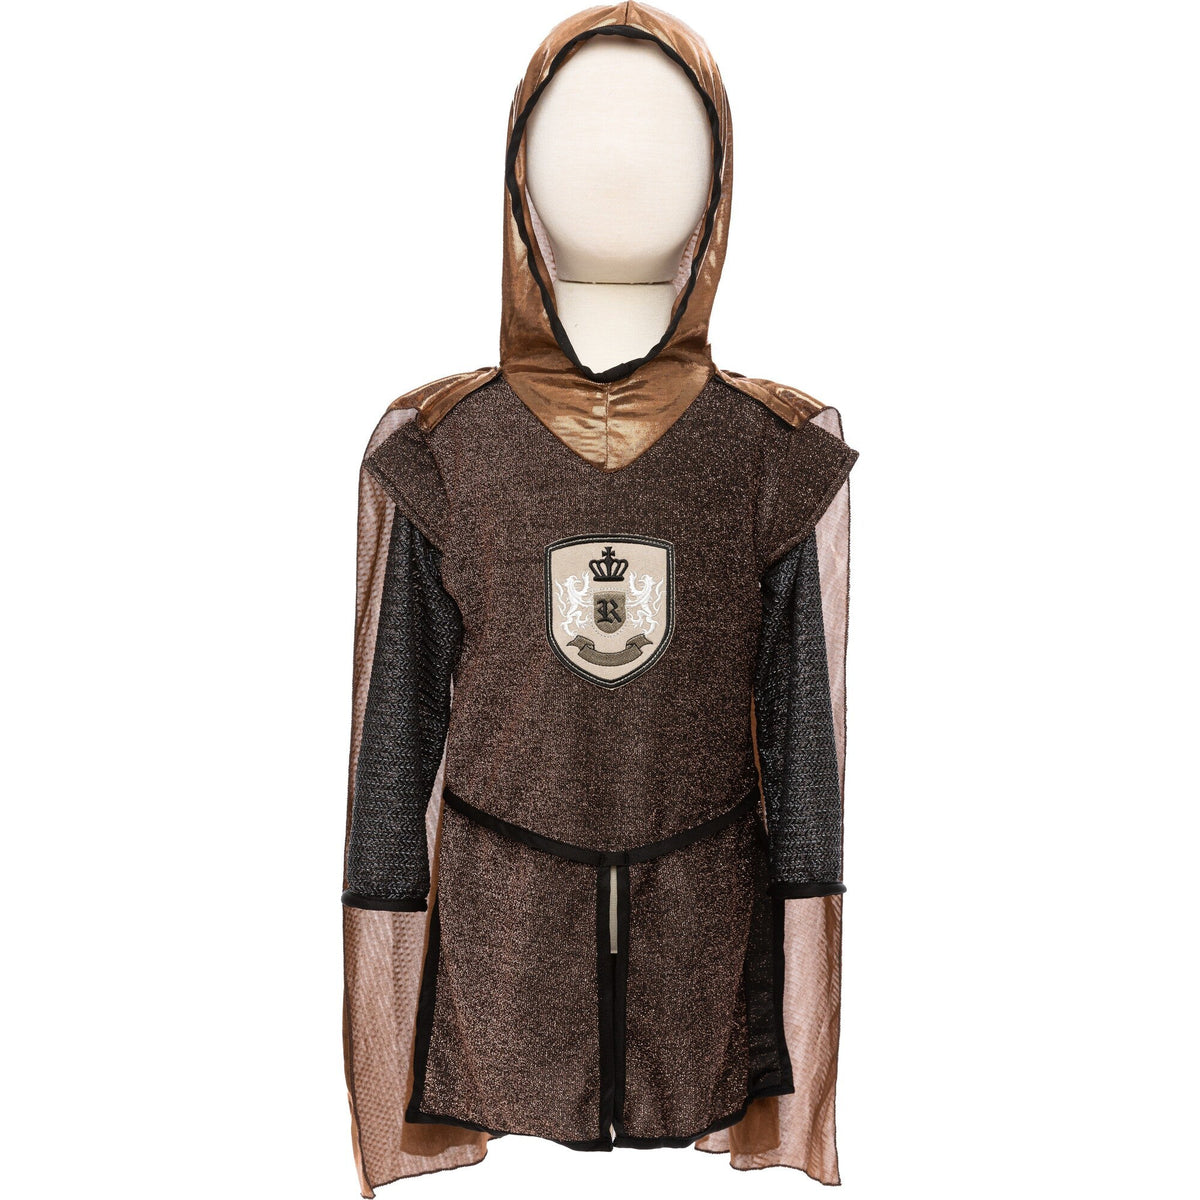 Brilliant Copper Knight Costumes with Tunic Cape and Crown Size 5-6